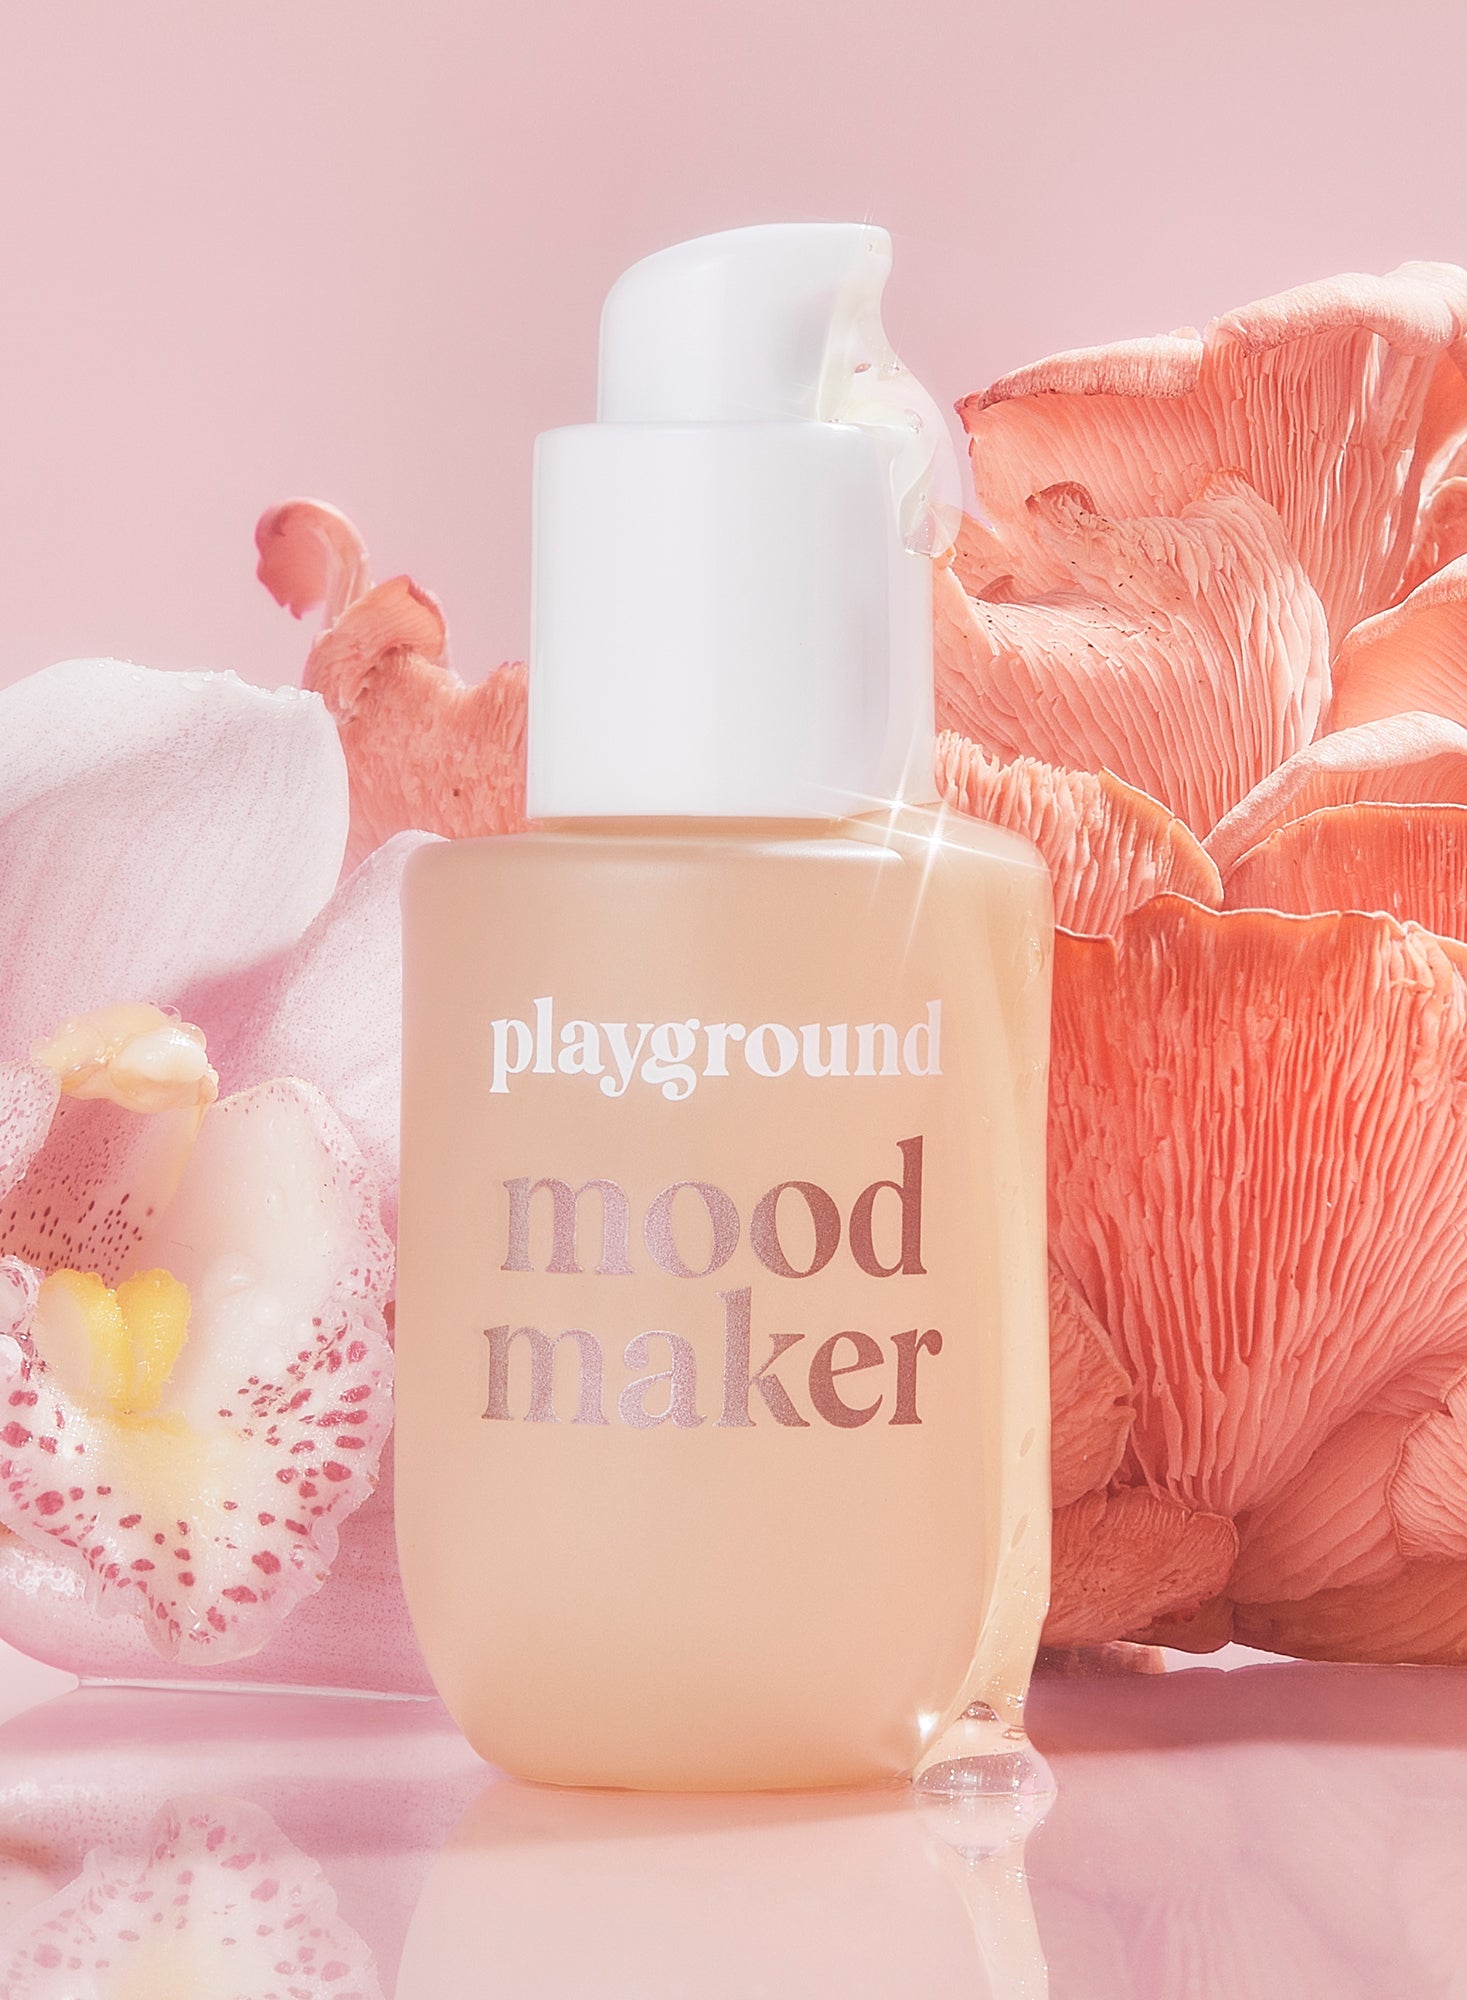 Playground Mood Maker Intimacy Oil